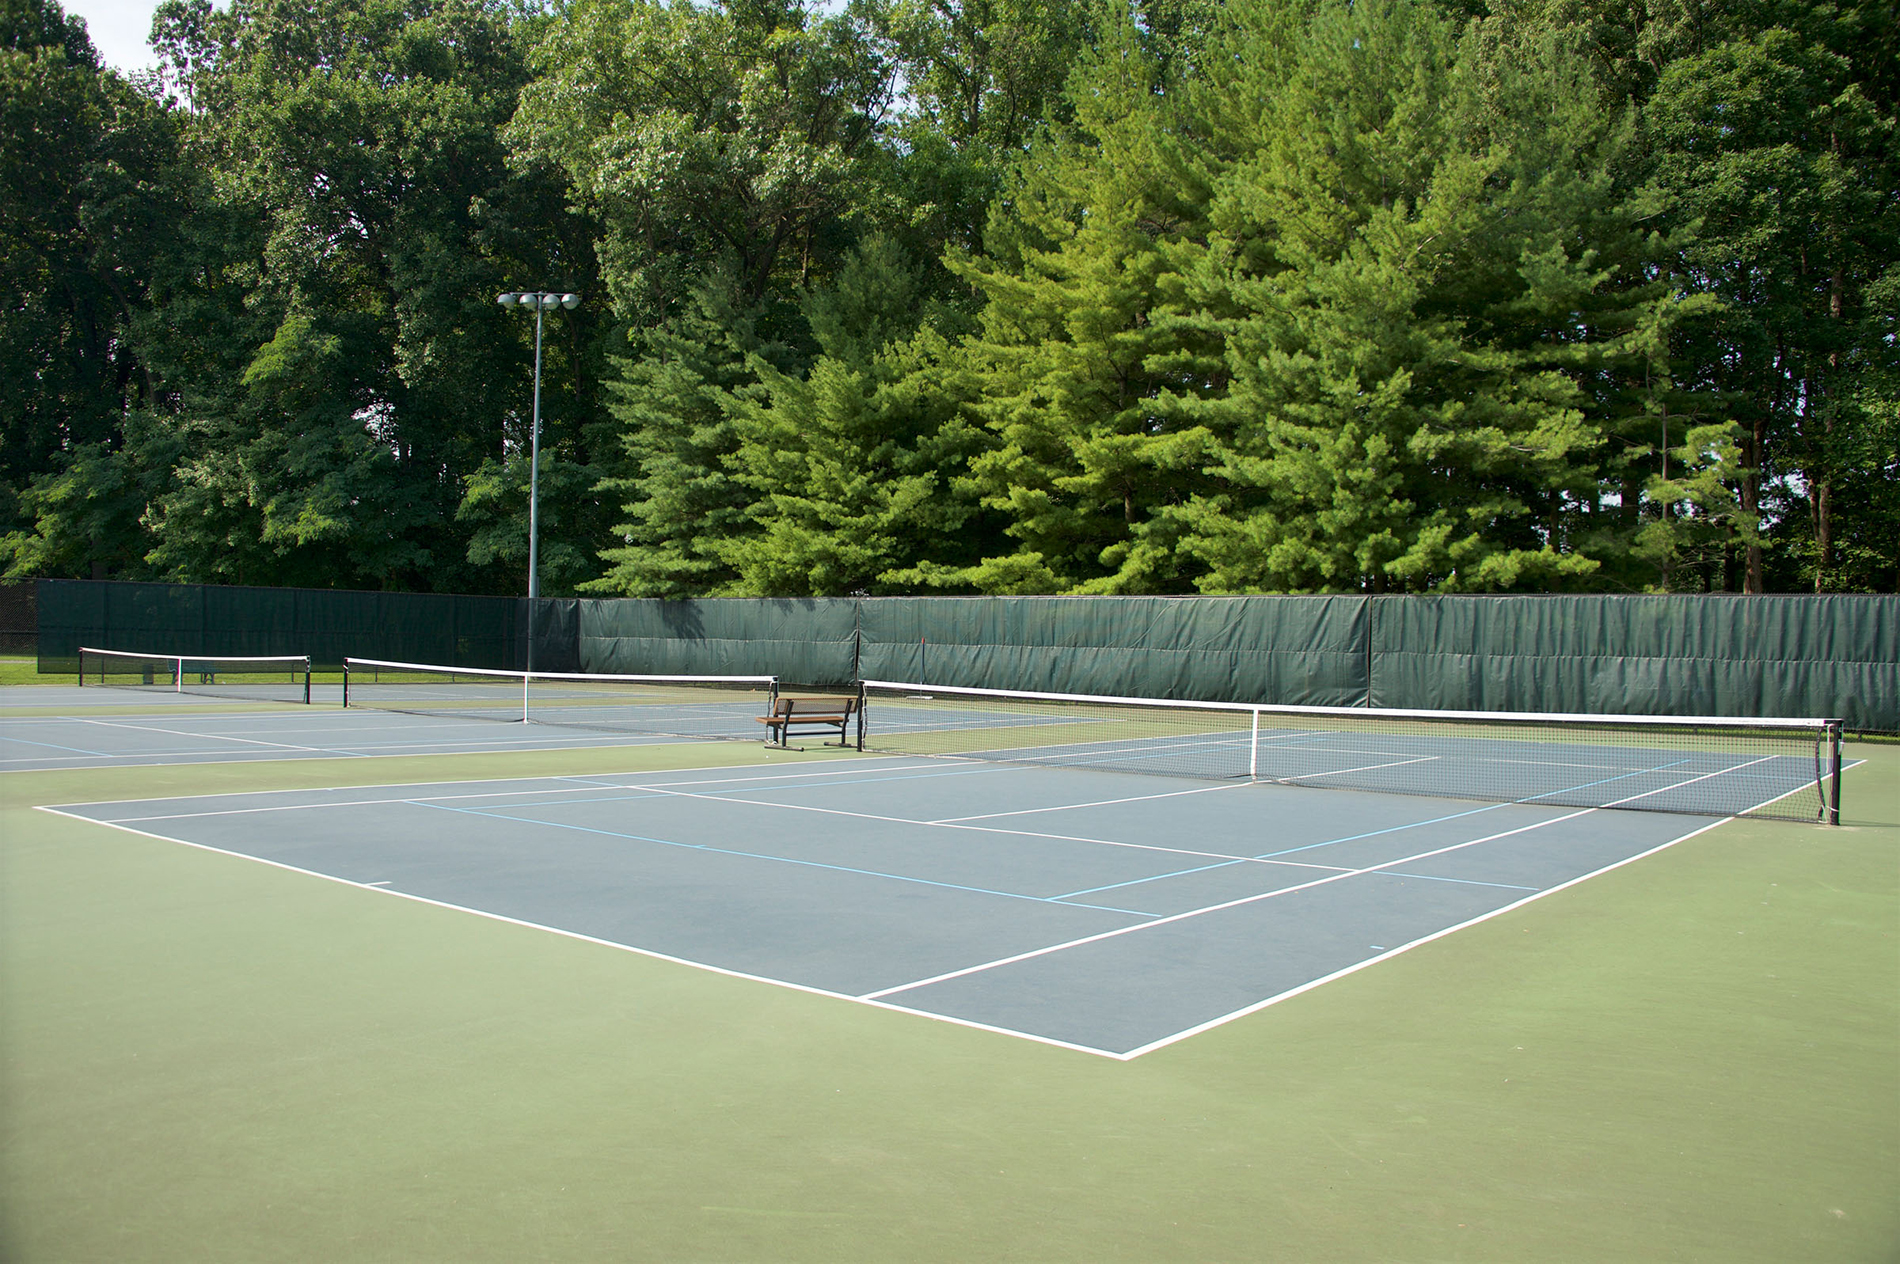 Tennis Courts at Cabin John Regional Park